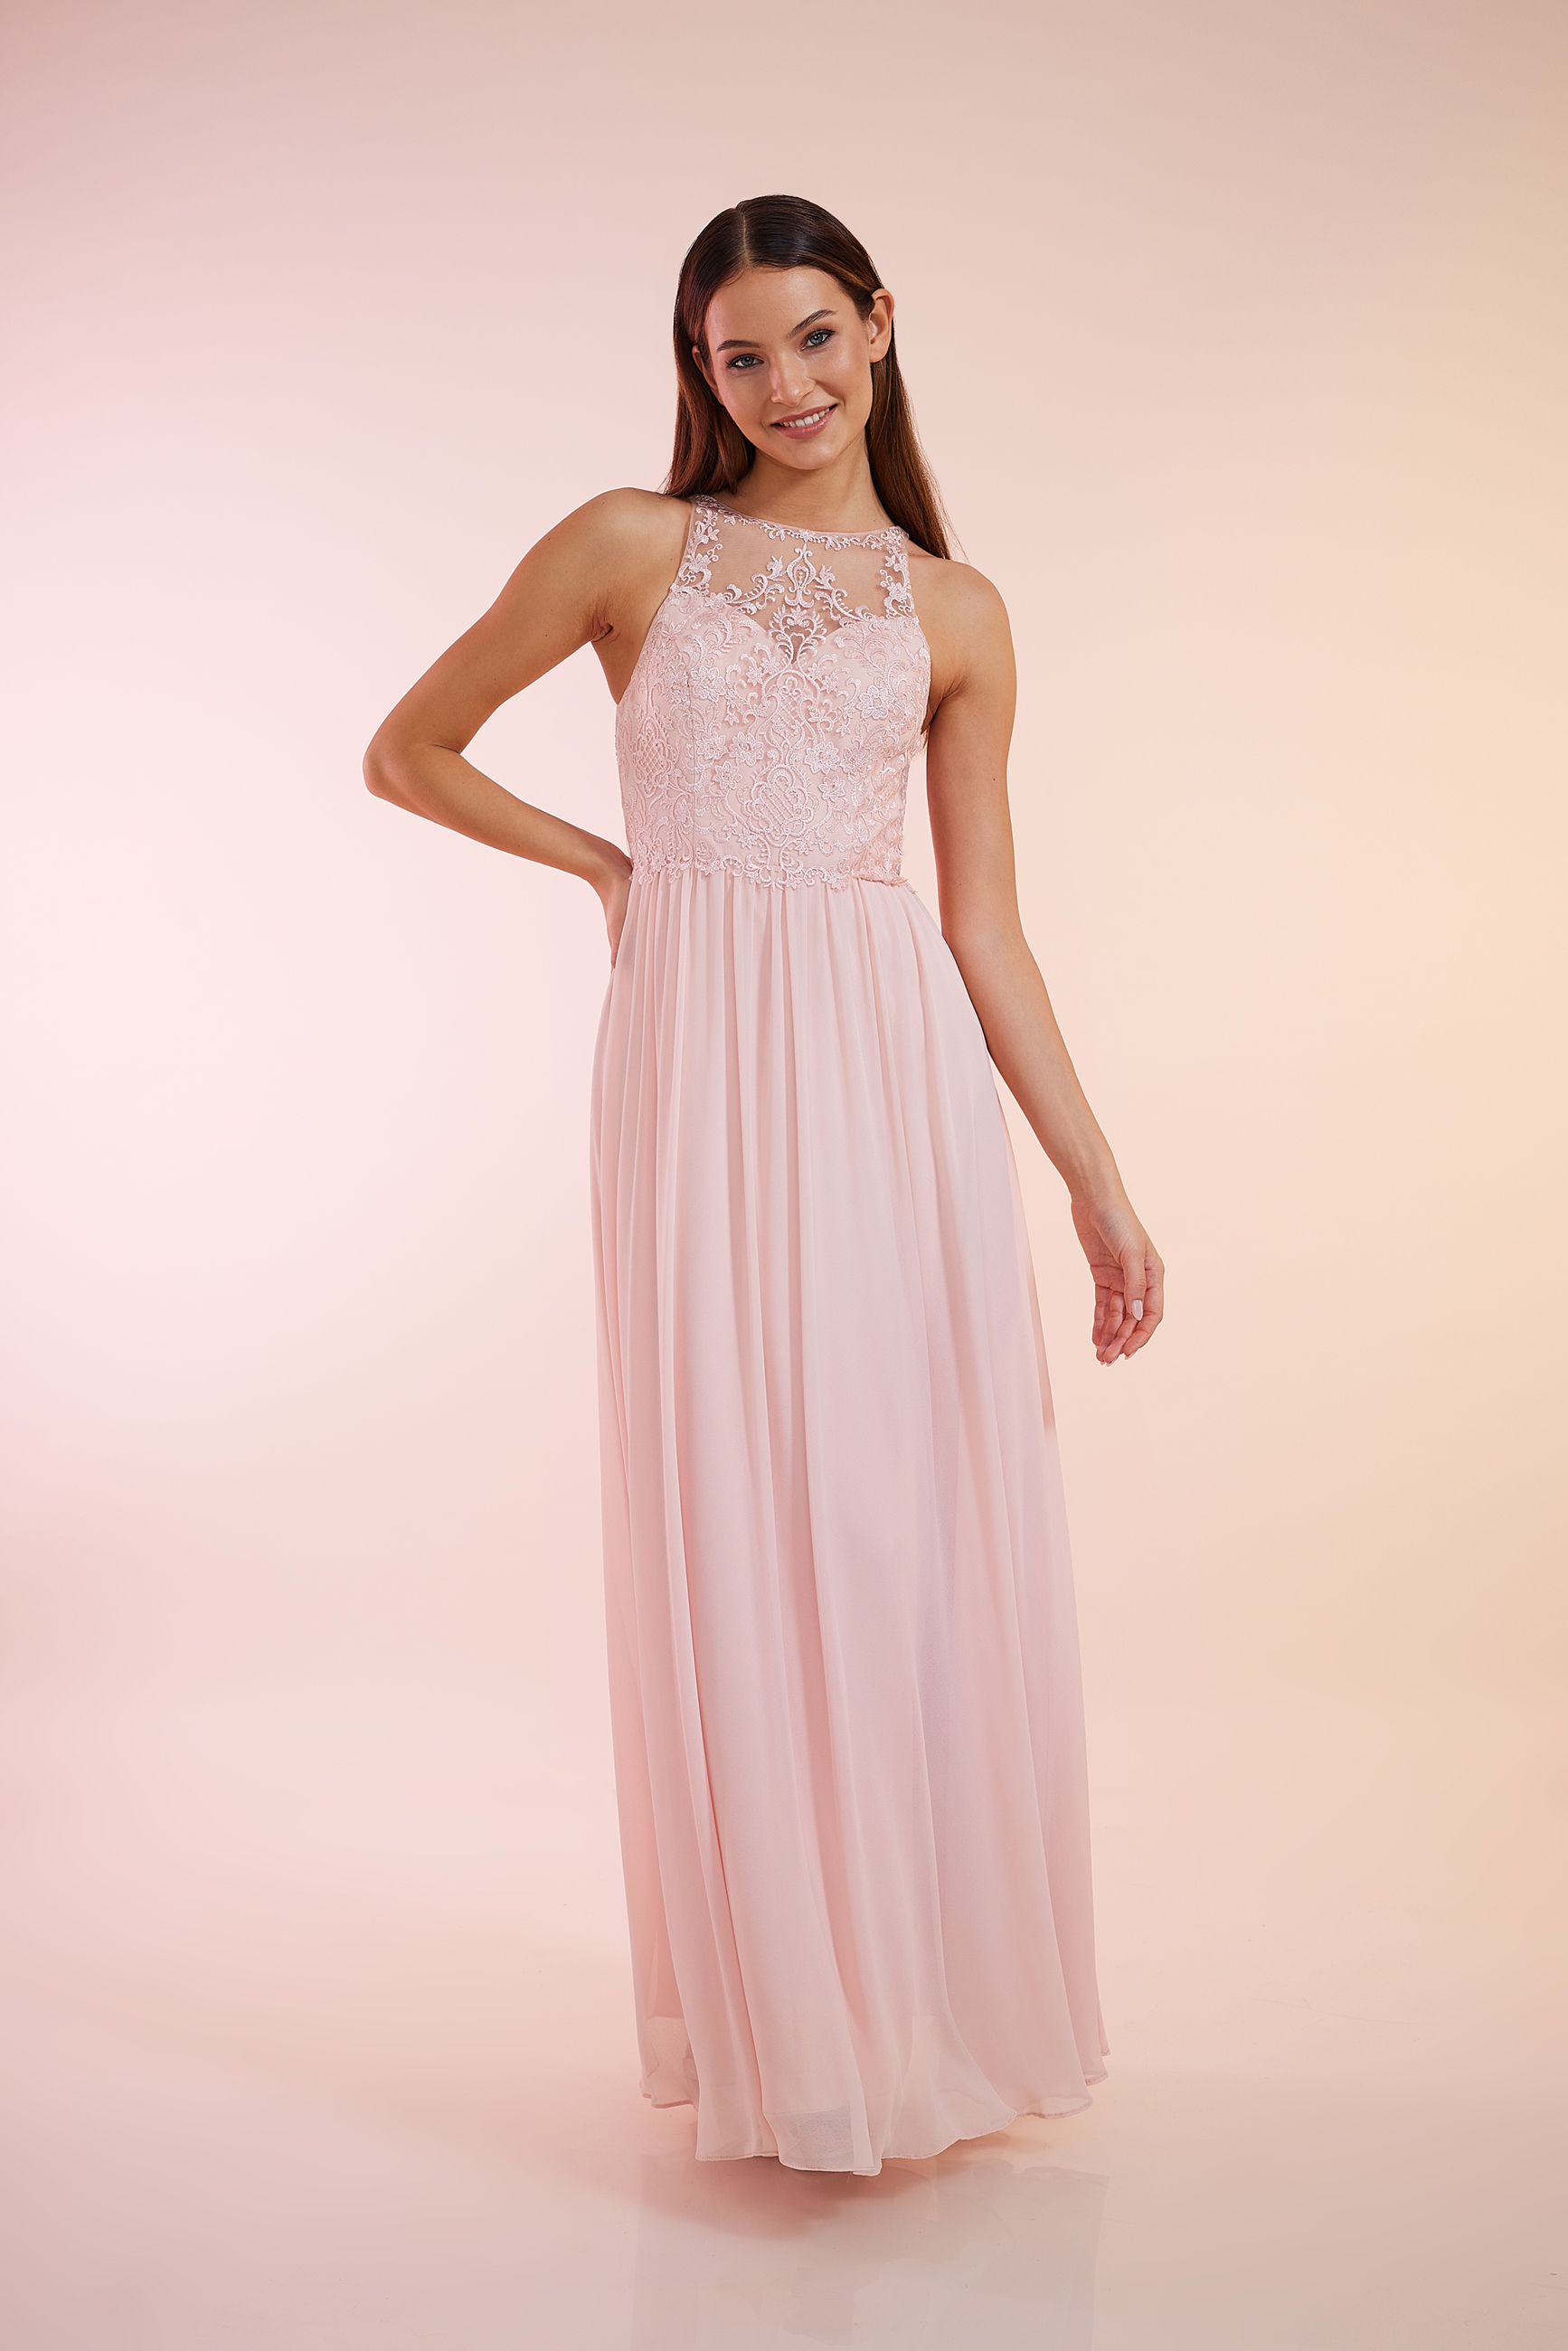 одеколон rose blush 50ml лимитированный дизайн Платье LAONA Abend Delicate Love Dress, цвет Rose Blush